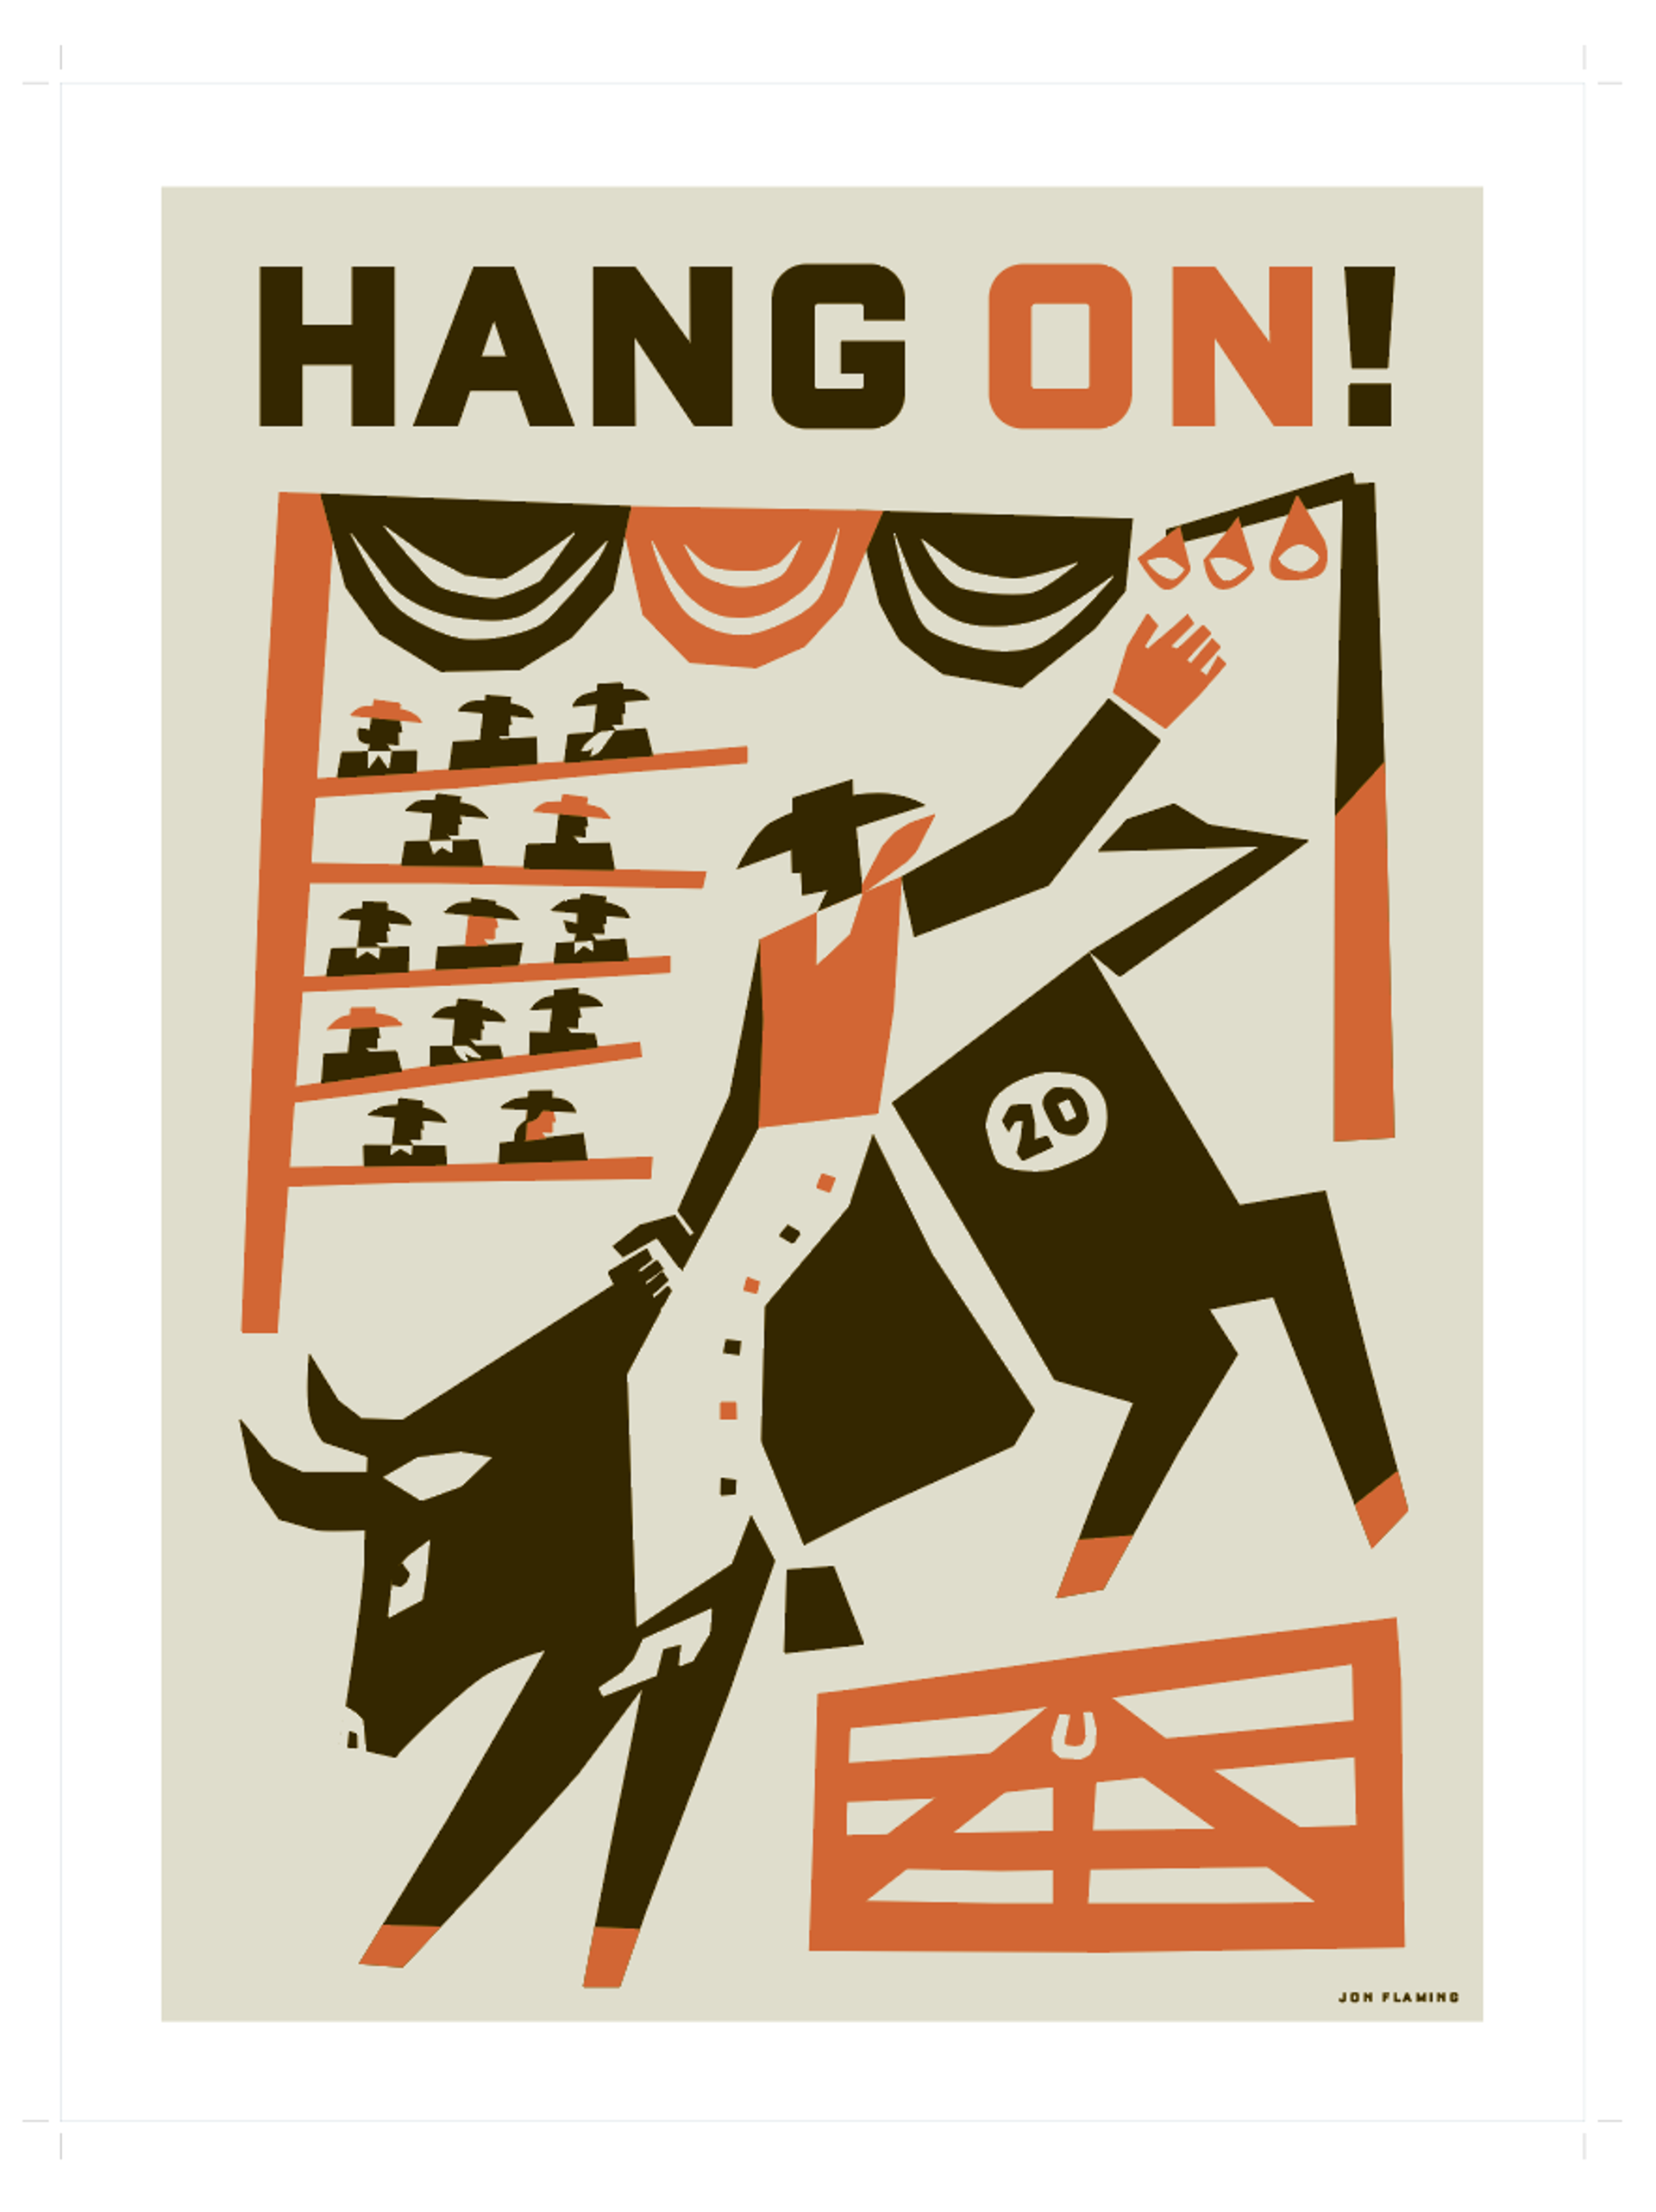 Hang On! by Jon Flaming Prints